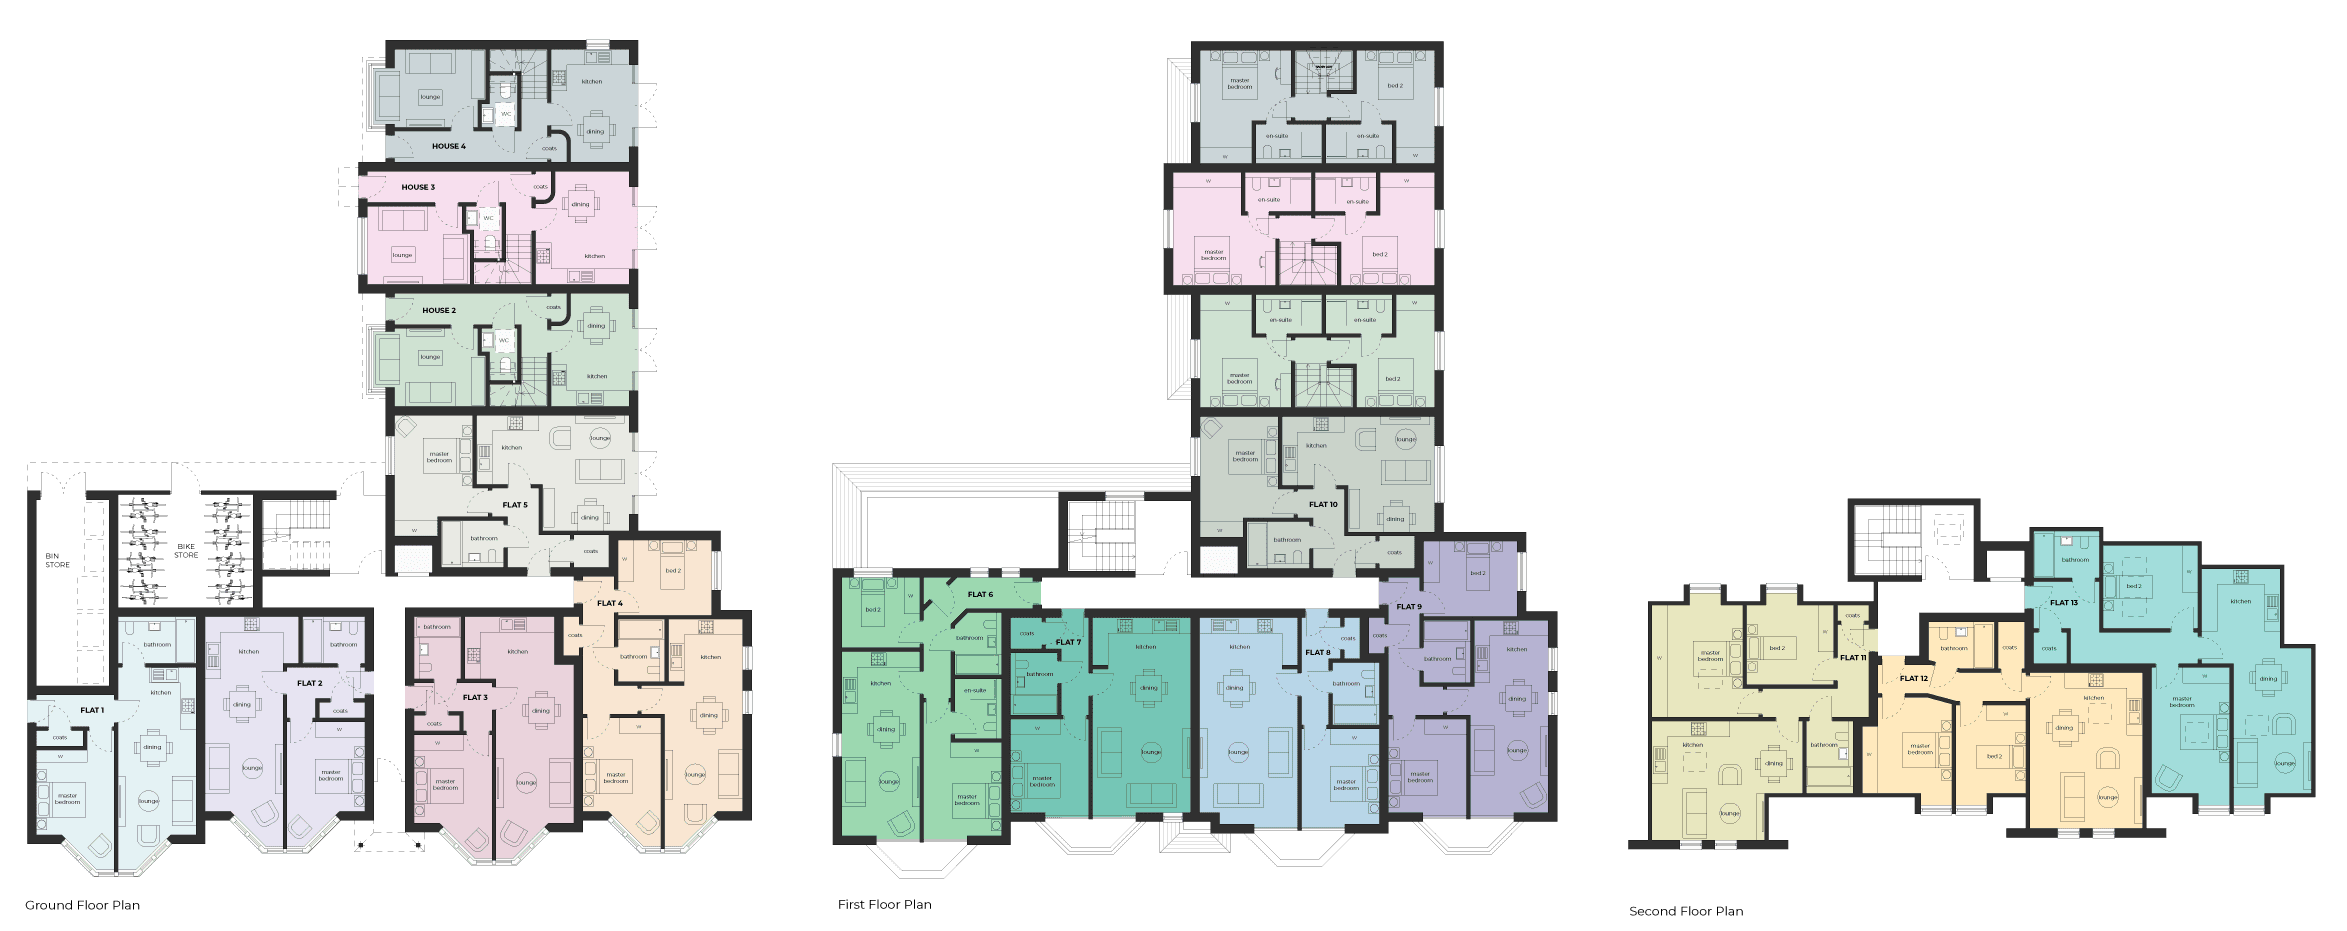 Summerhayes apartment floor plans